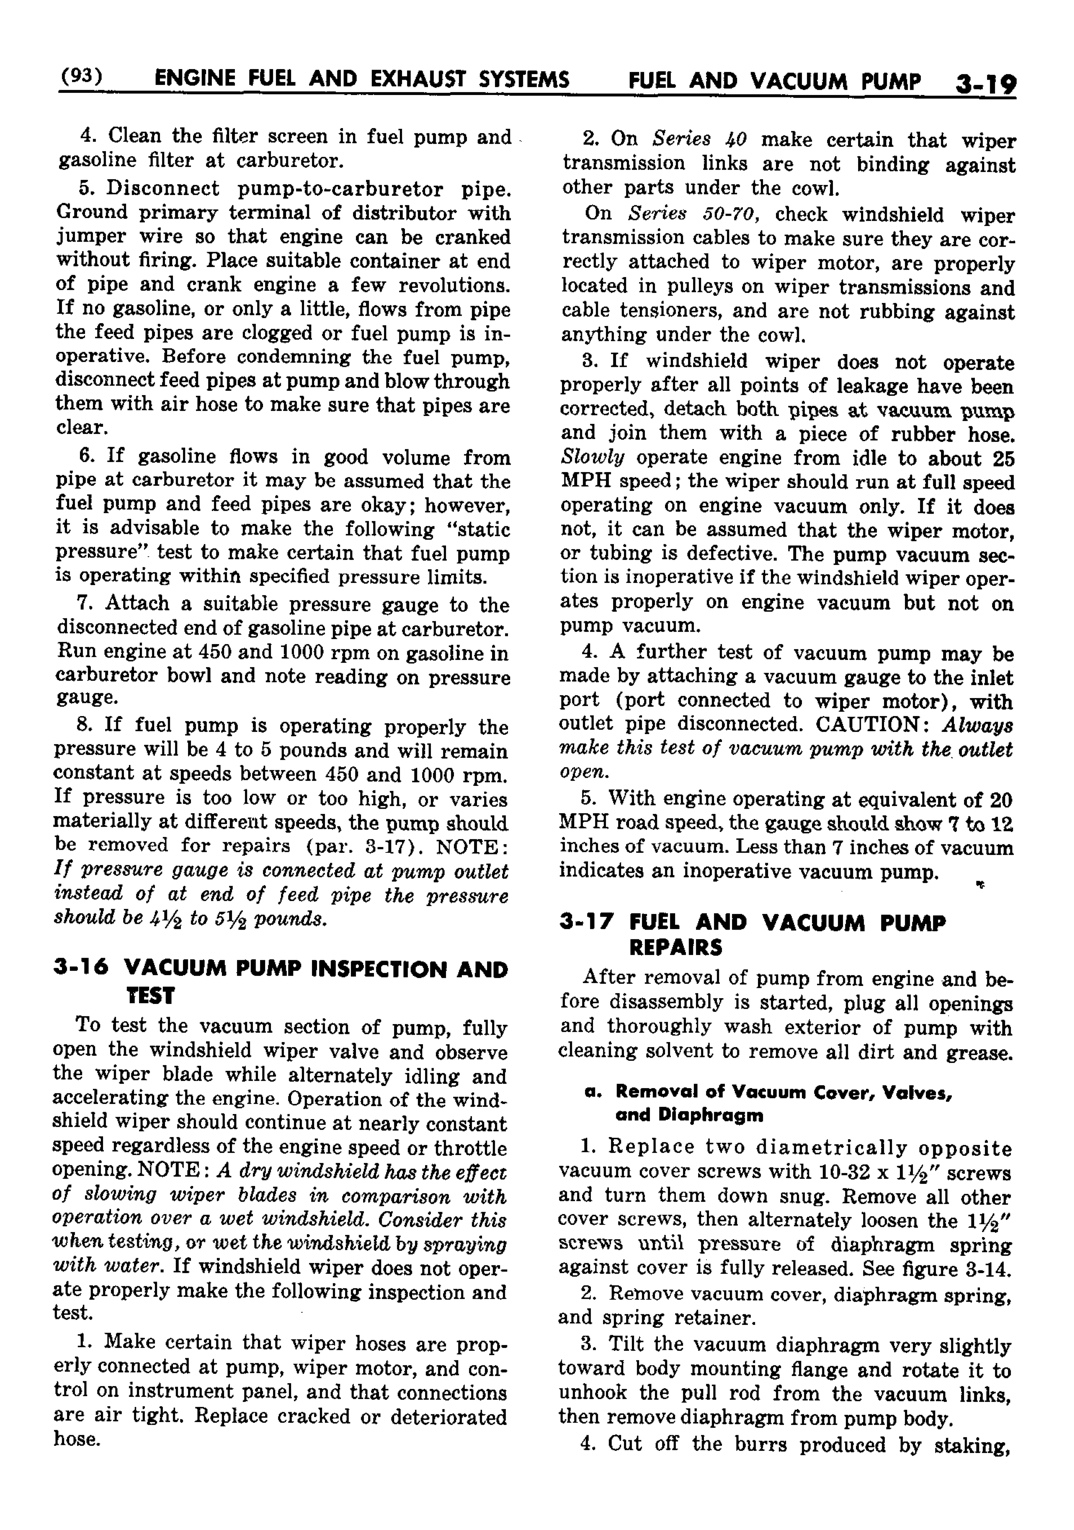 n_04 1952 Buick Shop Manual - Engine Fuel & Exhaust-019-019.jpg